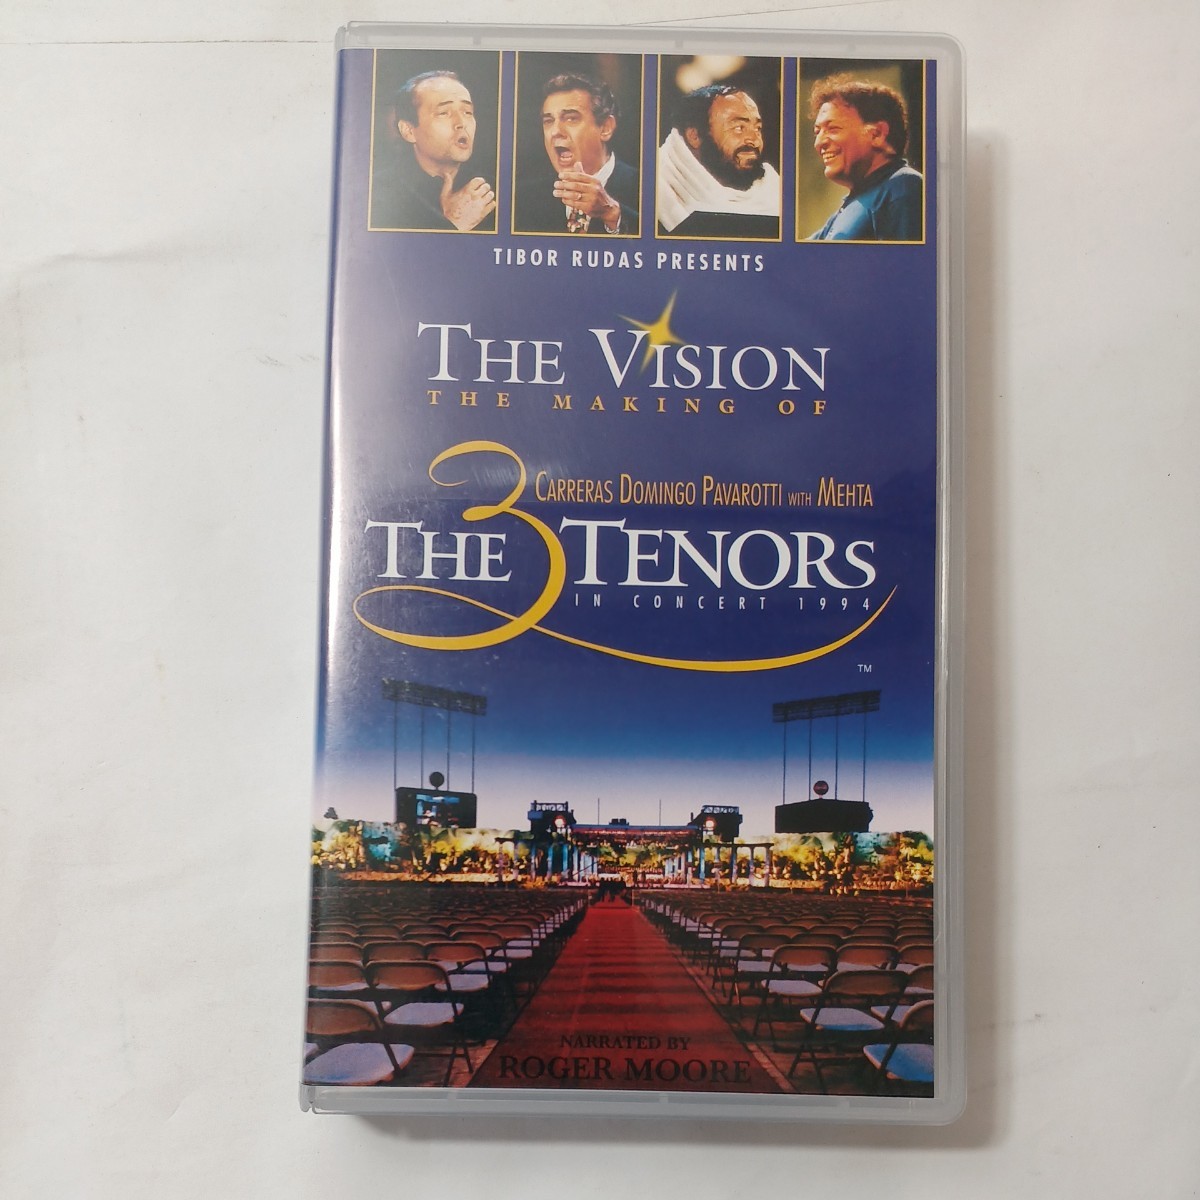 ZAA-ZVD21 ♪ VHS VIDEY WORLD 3 Major Tenor '94 Back Back исполнители: Pavarotti (Luciano), Domingo (Placid) и Currace (Jose)